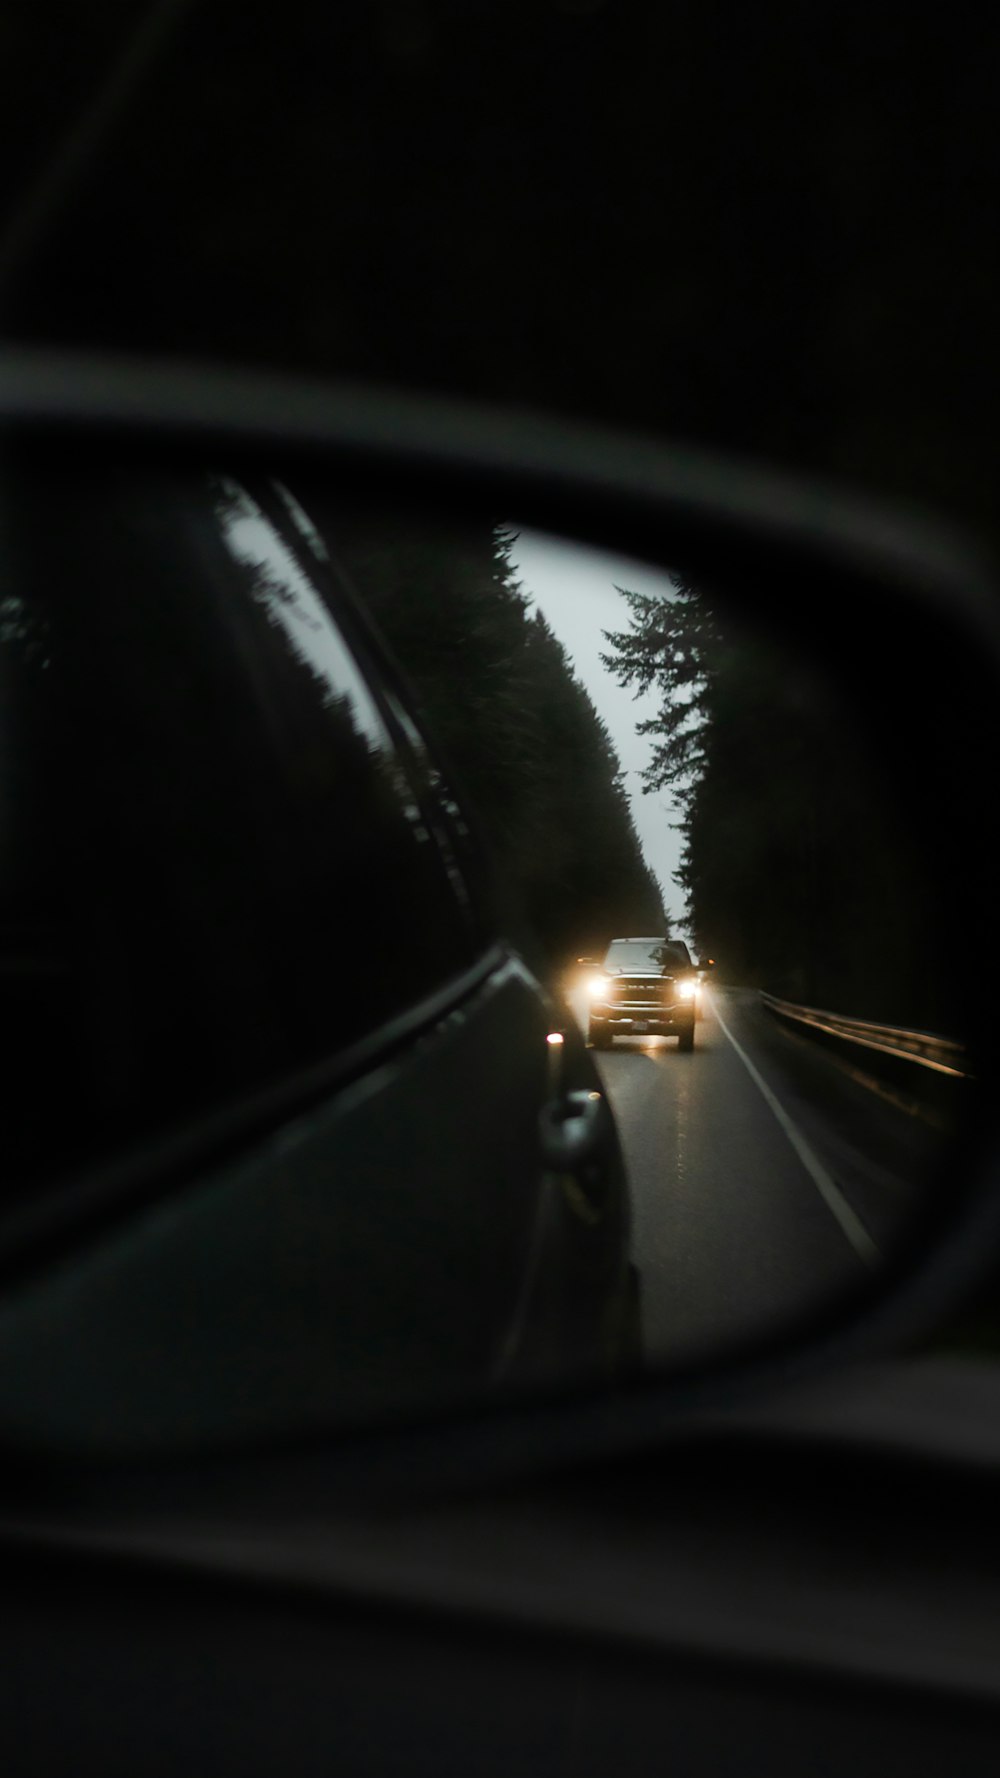 a car's rear view mirror reflecting a car's headlights